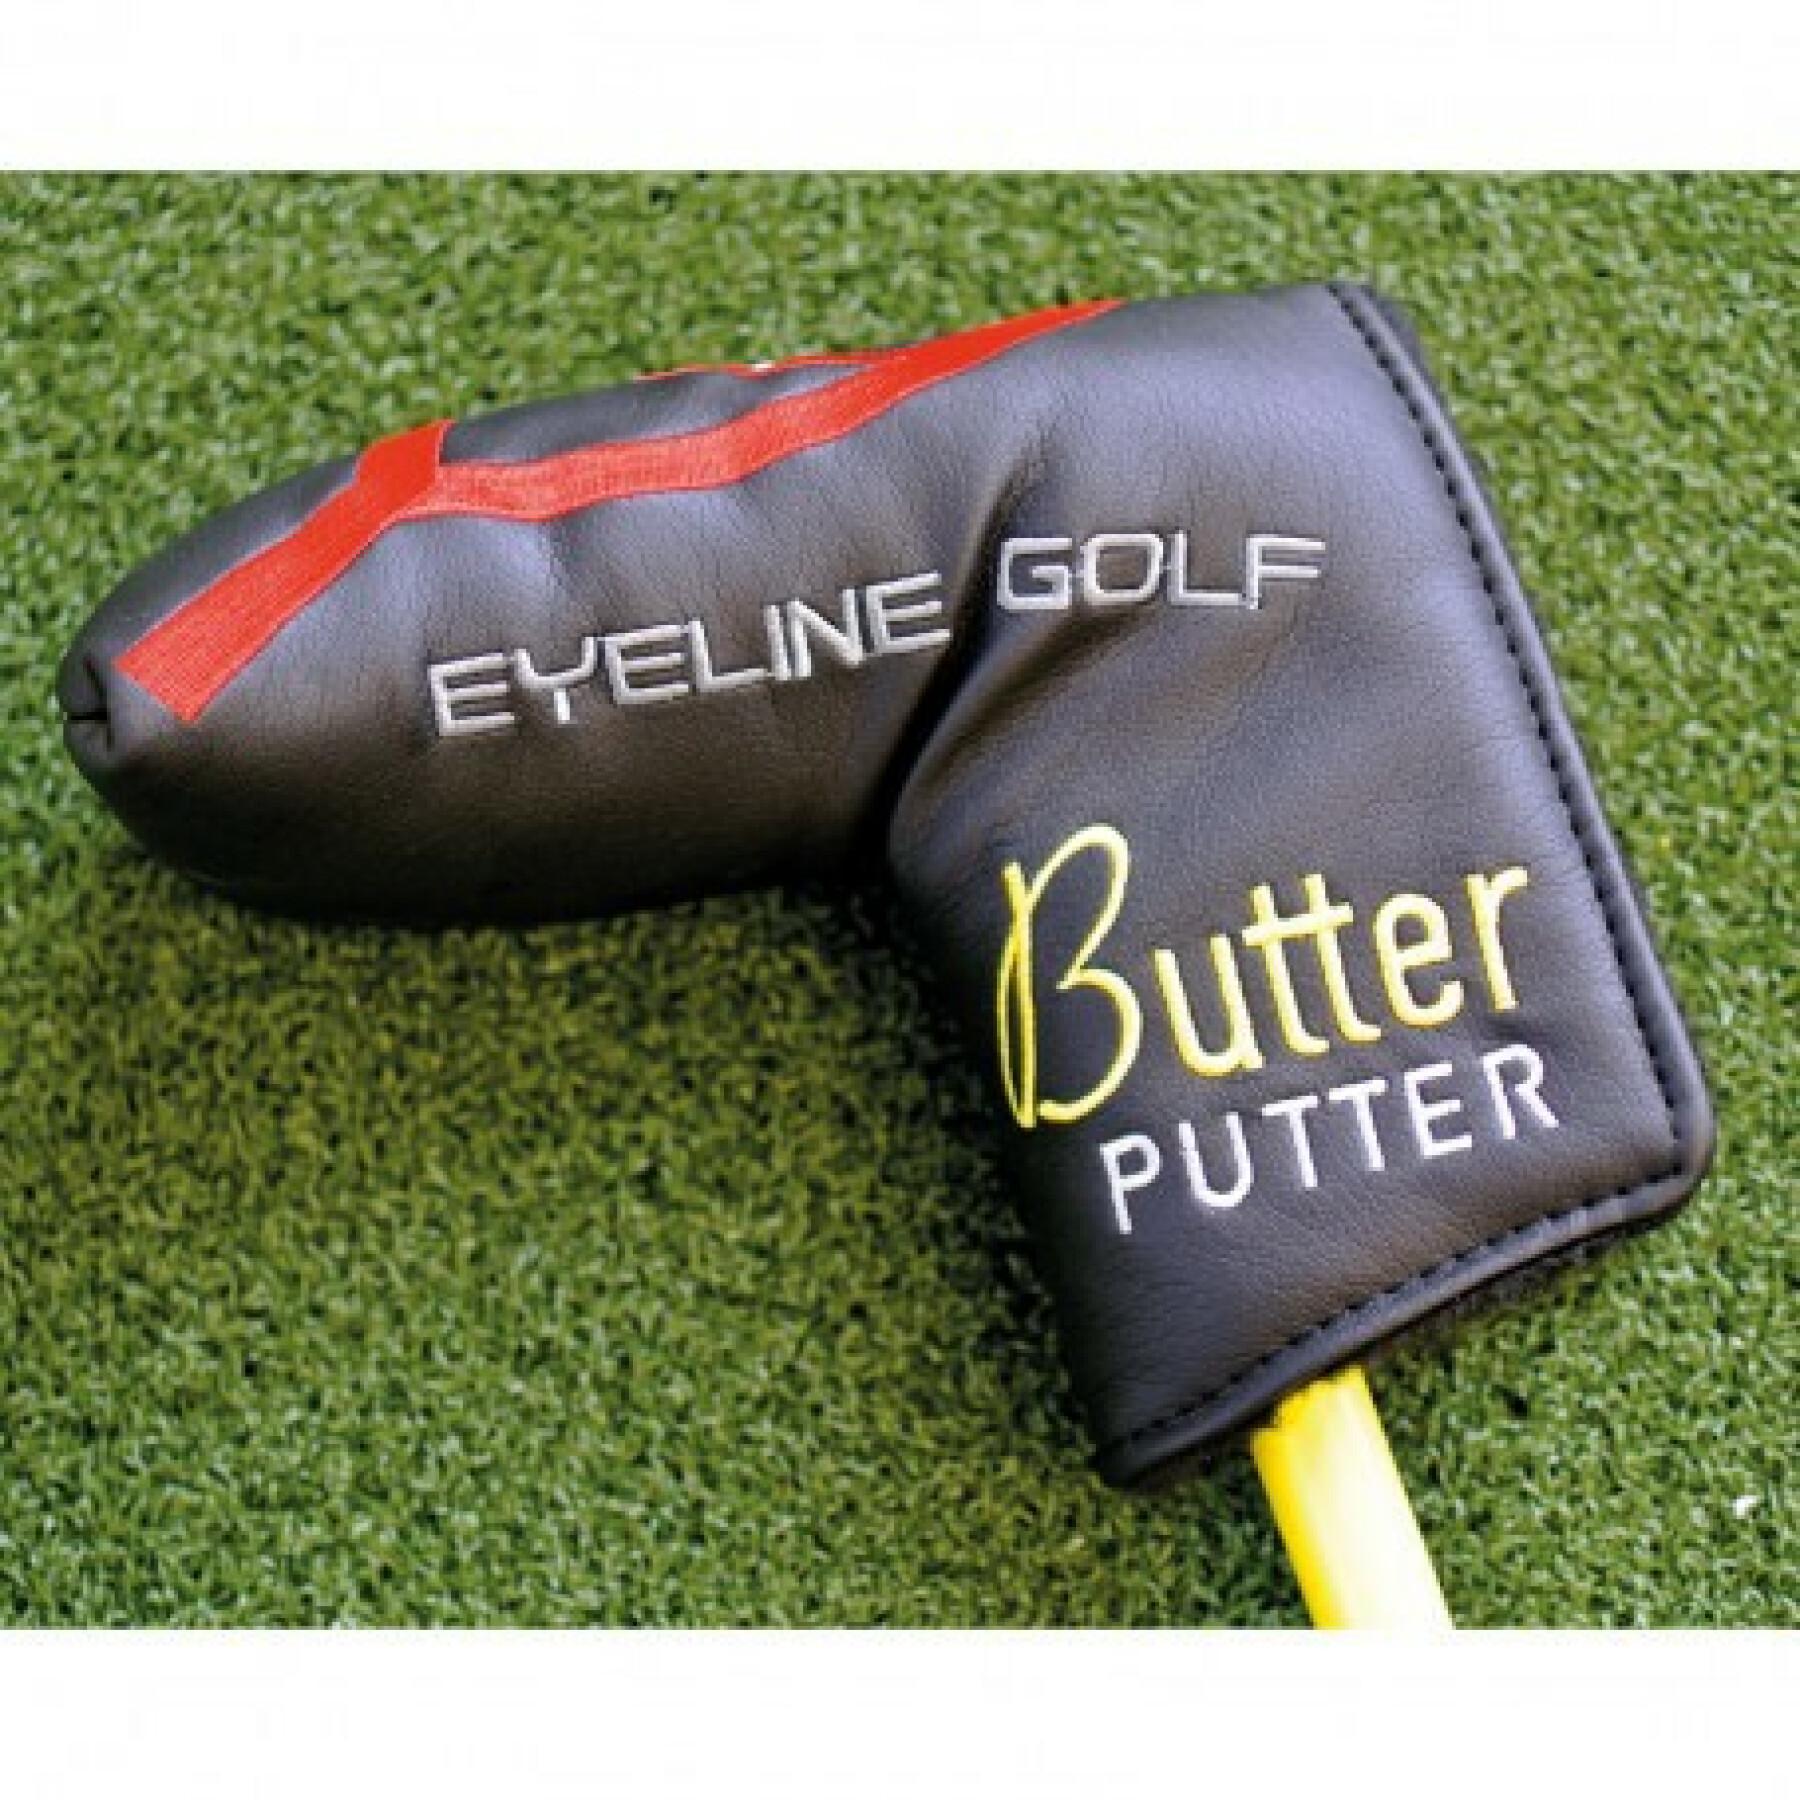 Boter putter Eyeline Golf